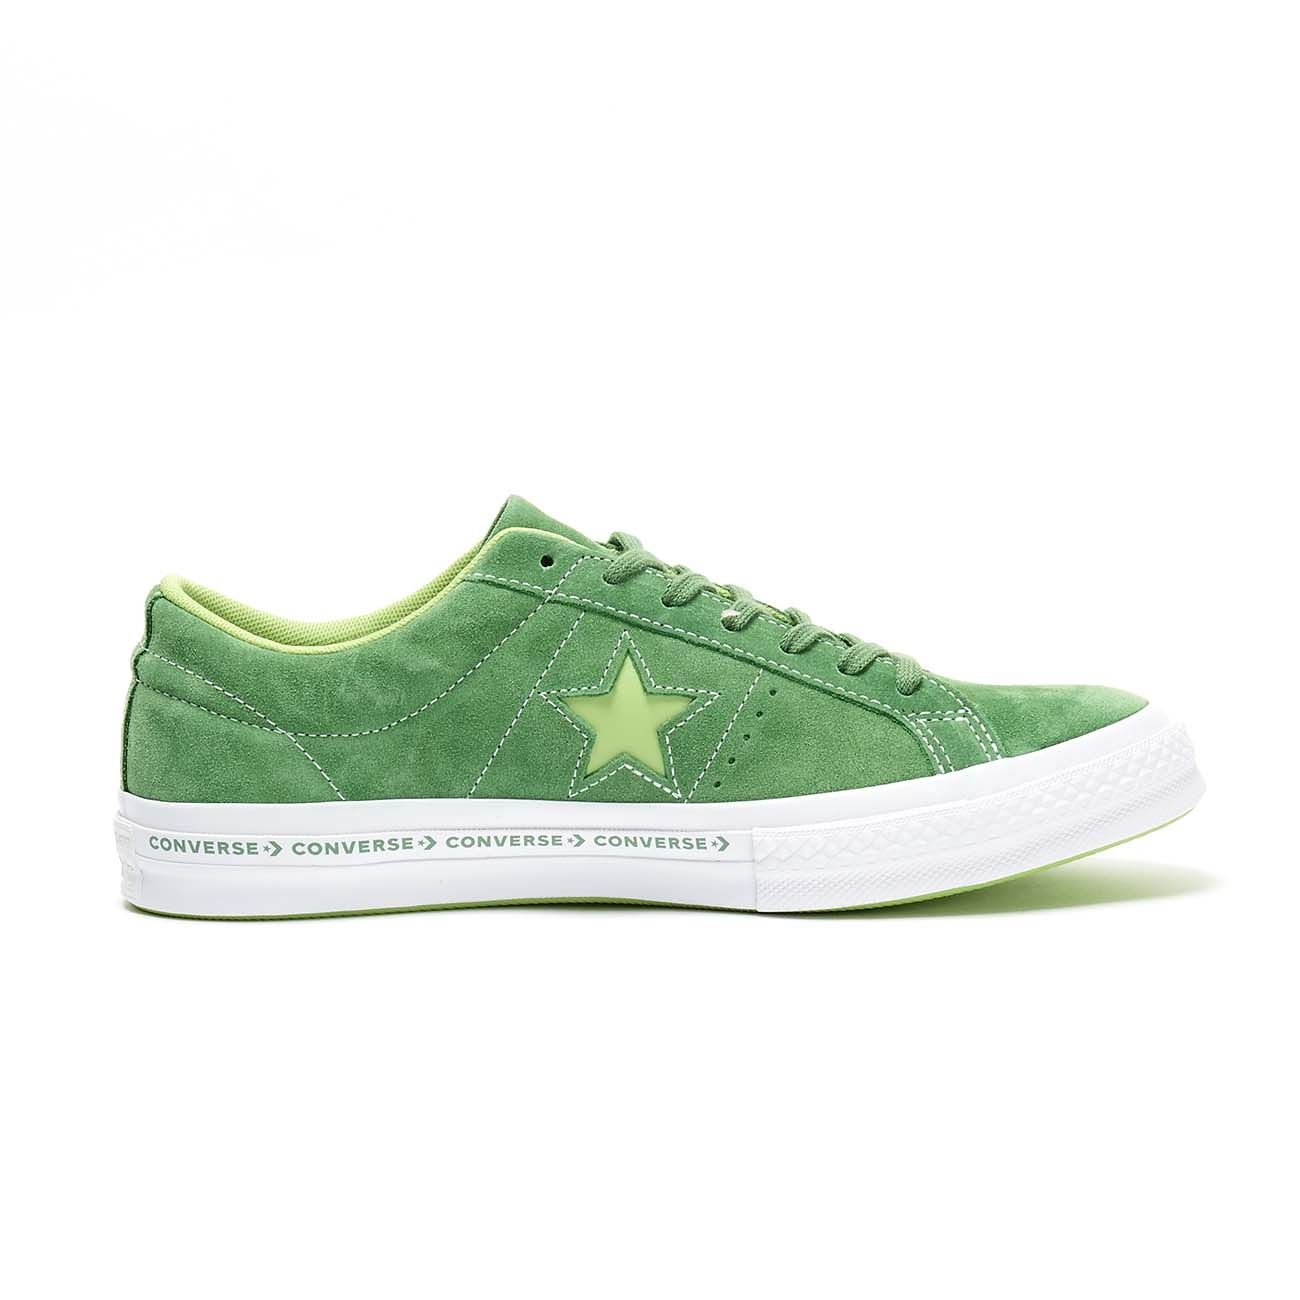 converse one star ox mint green